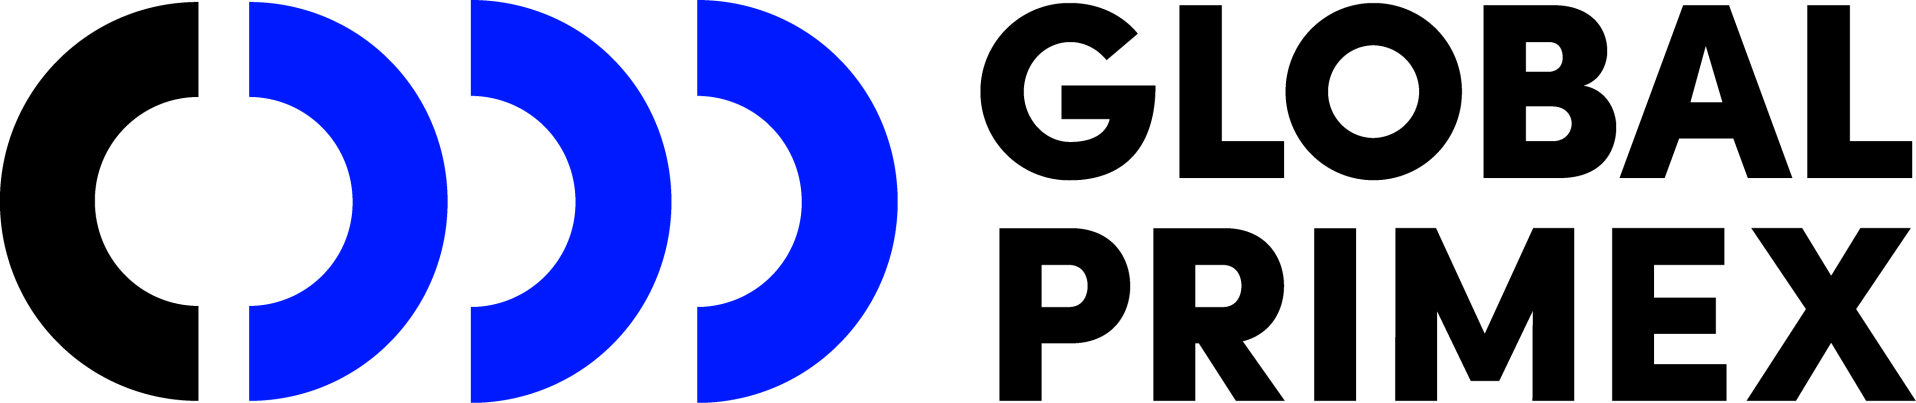 Global Primex Logo